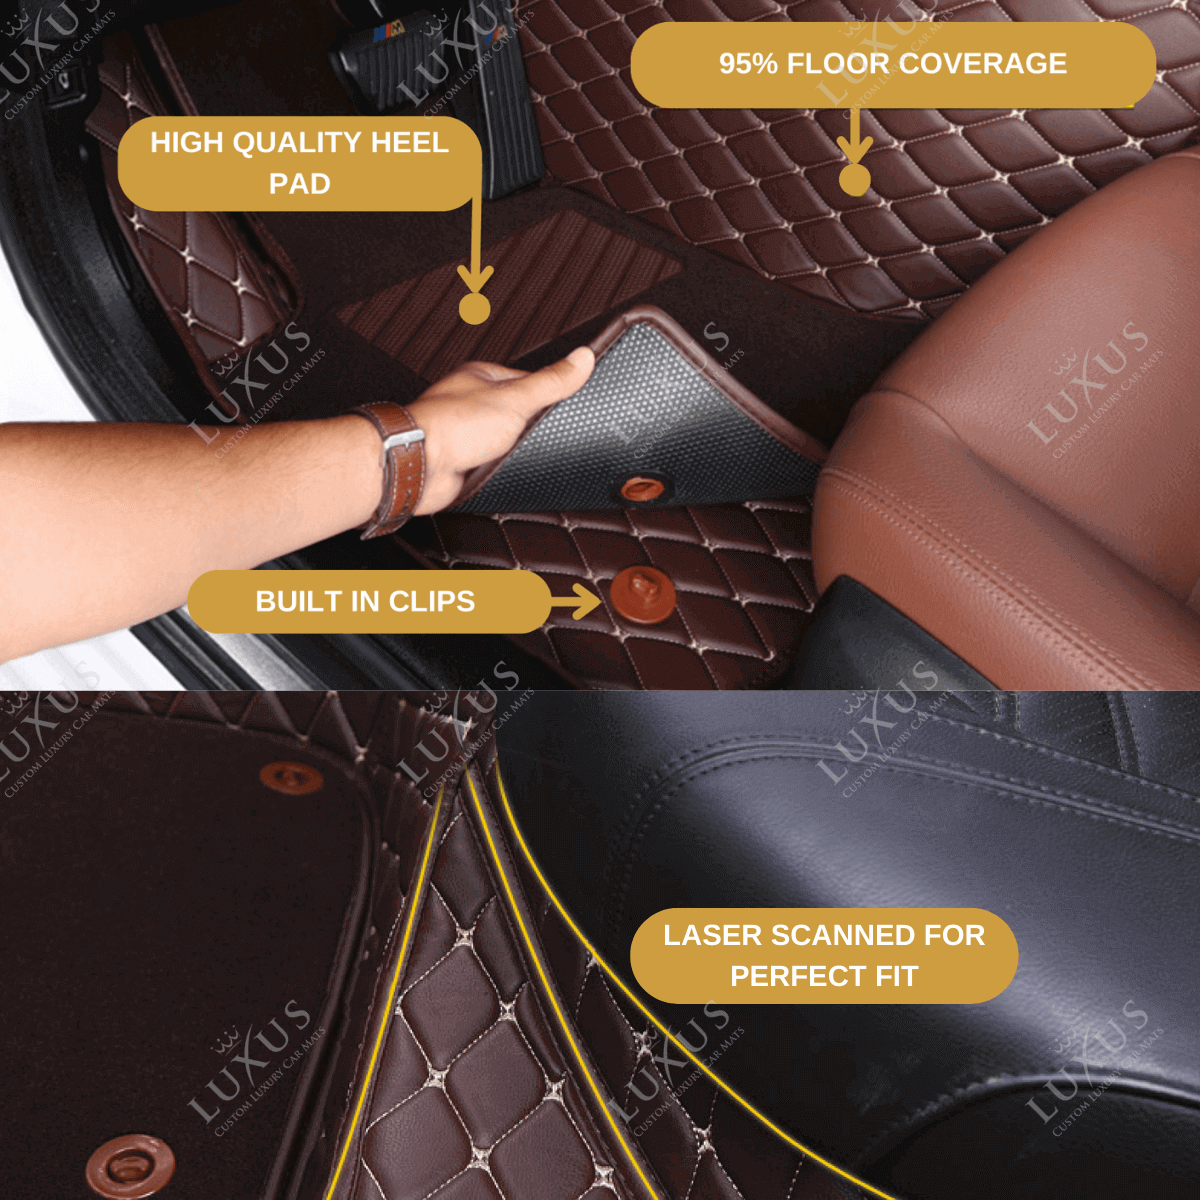 Chocolate Brown Diamond Base & Beige Top Carpet Double Layer Luxury Car Mats Set